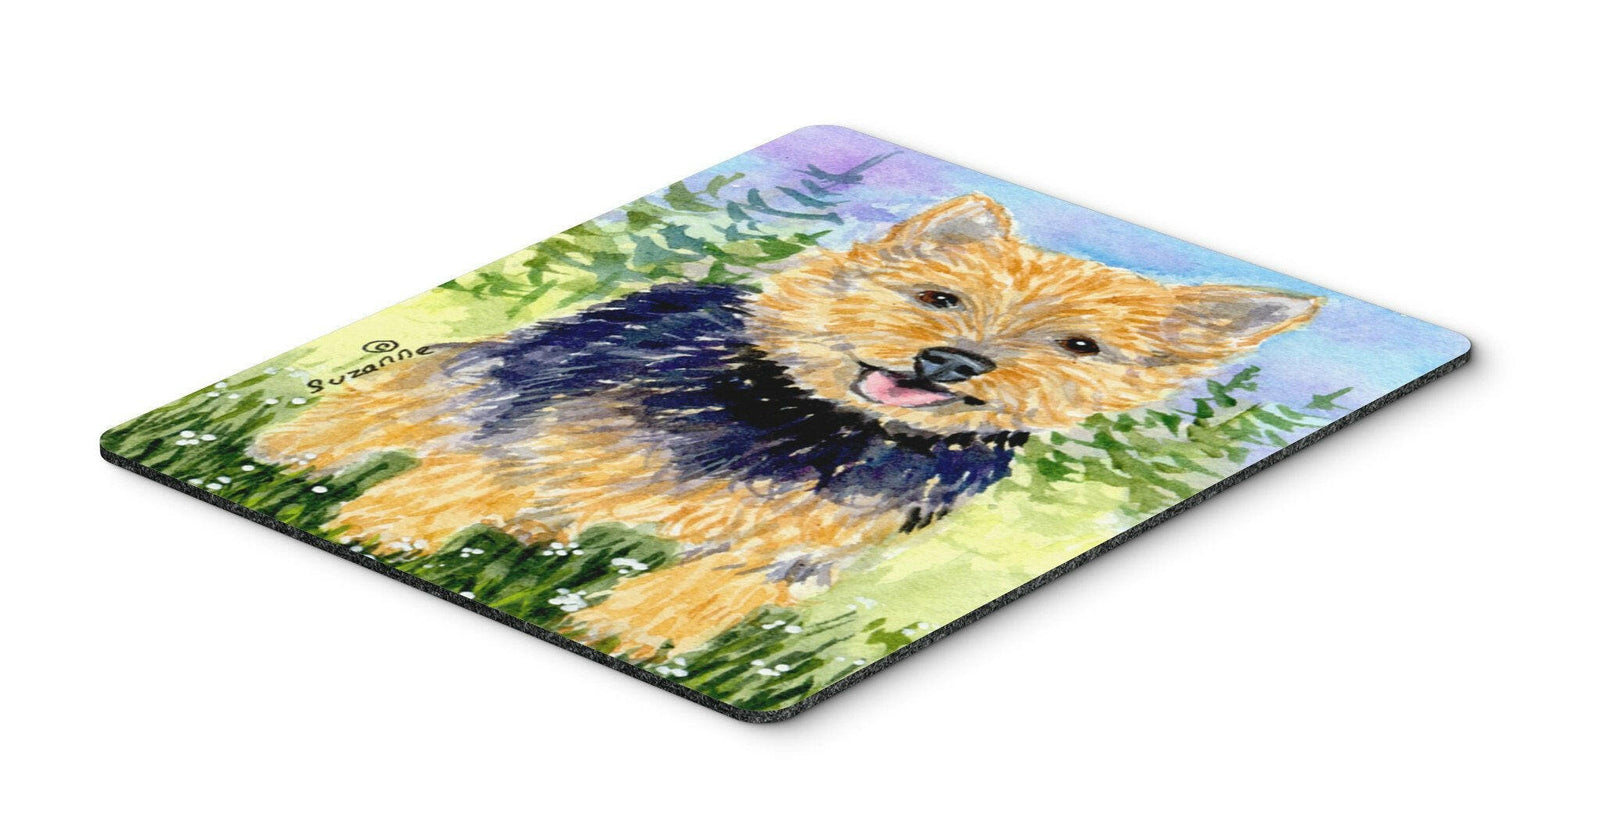 Norwich Terrier Mouse Pad / Hot Pad / Trivet by Caroline's Treasures